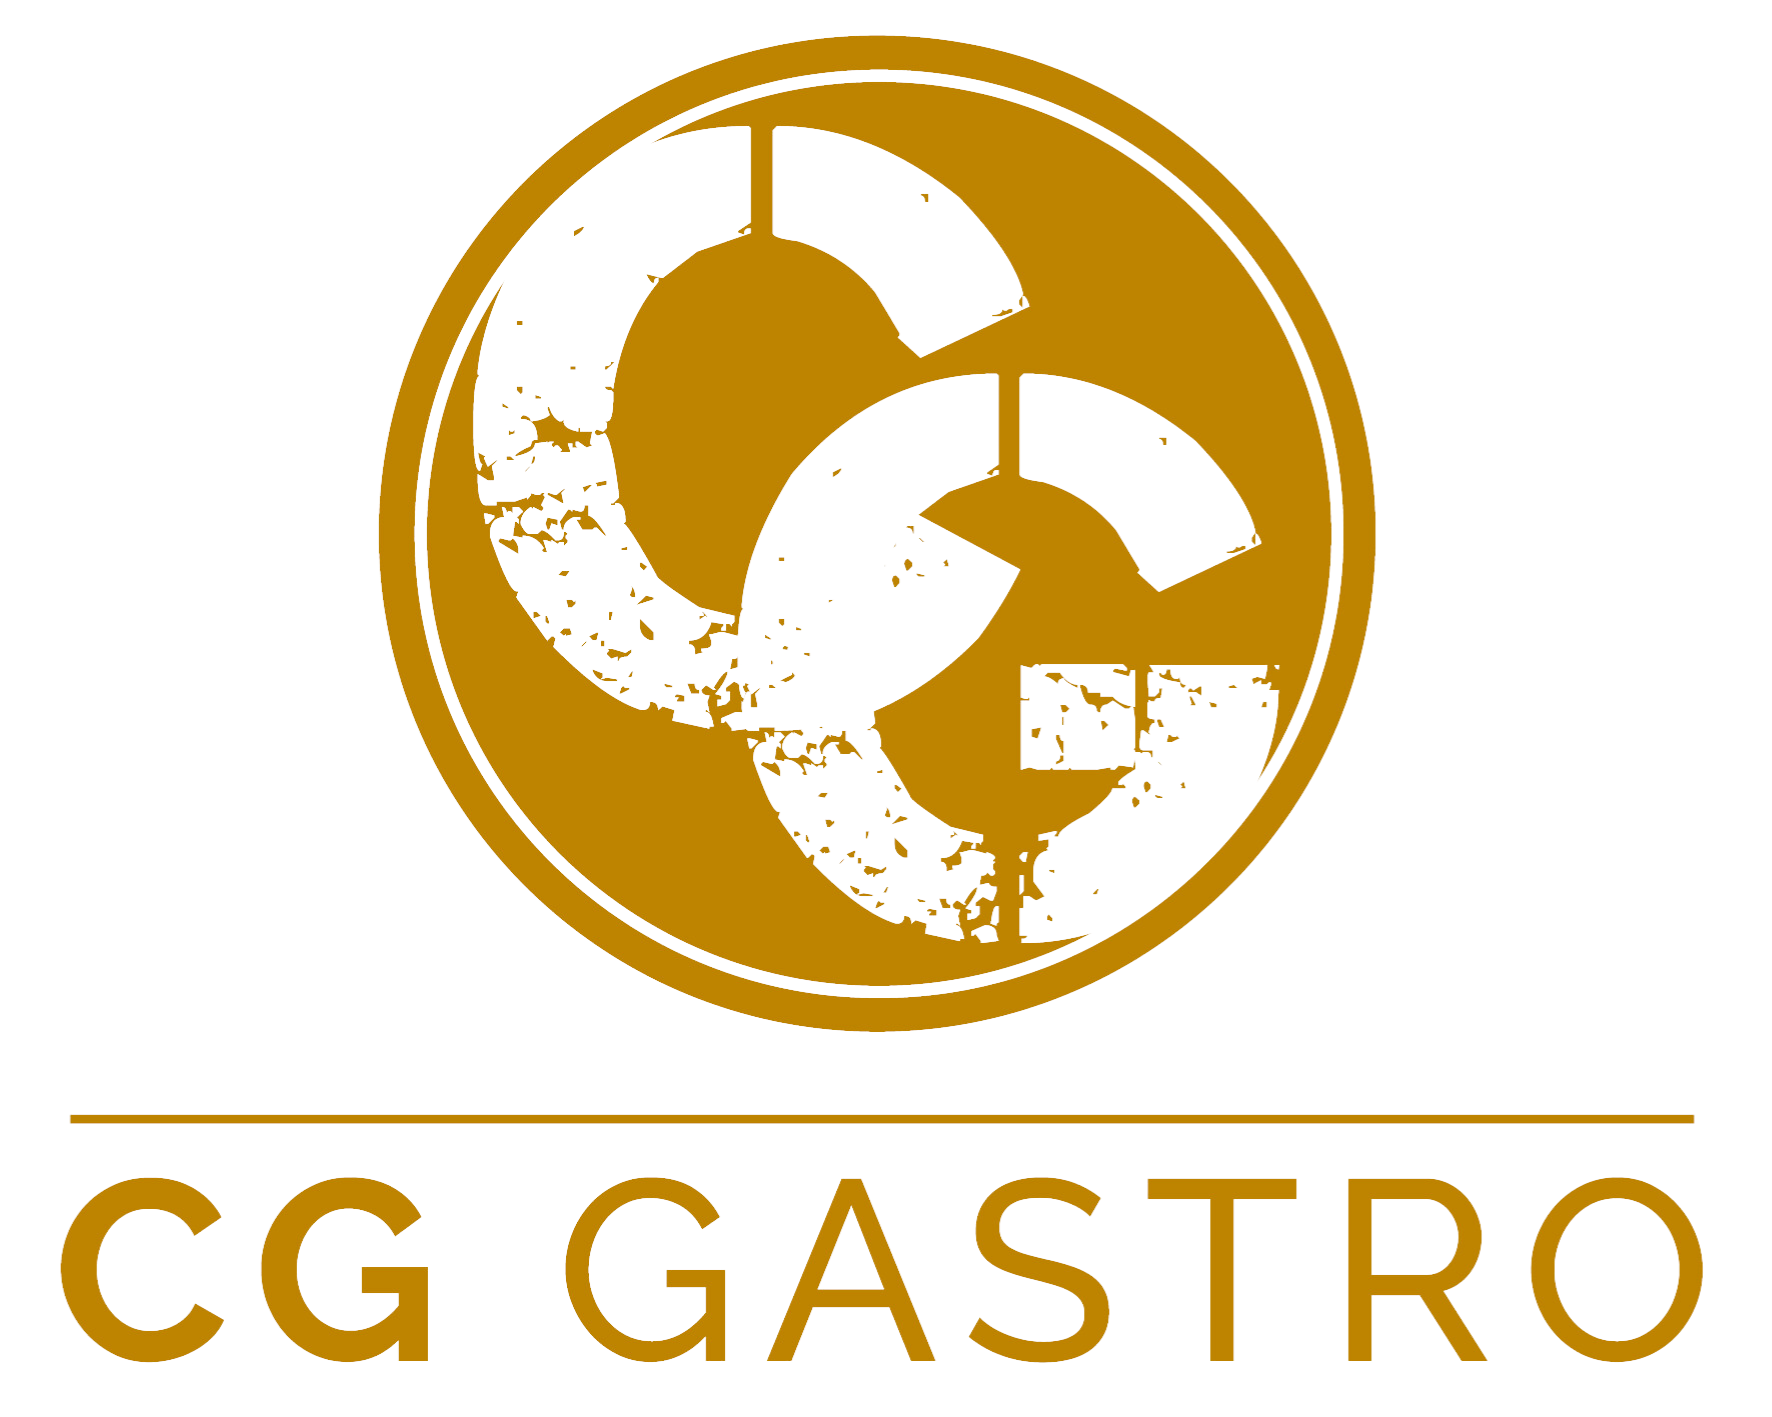 Kleve 47533 logo cggastro CG-Gastro Kongress kleve event catering